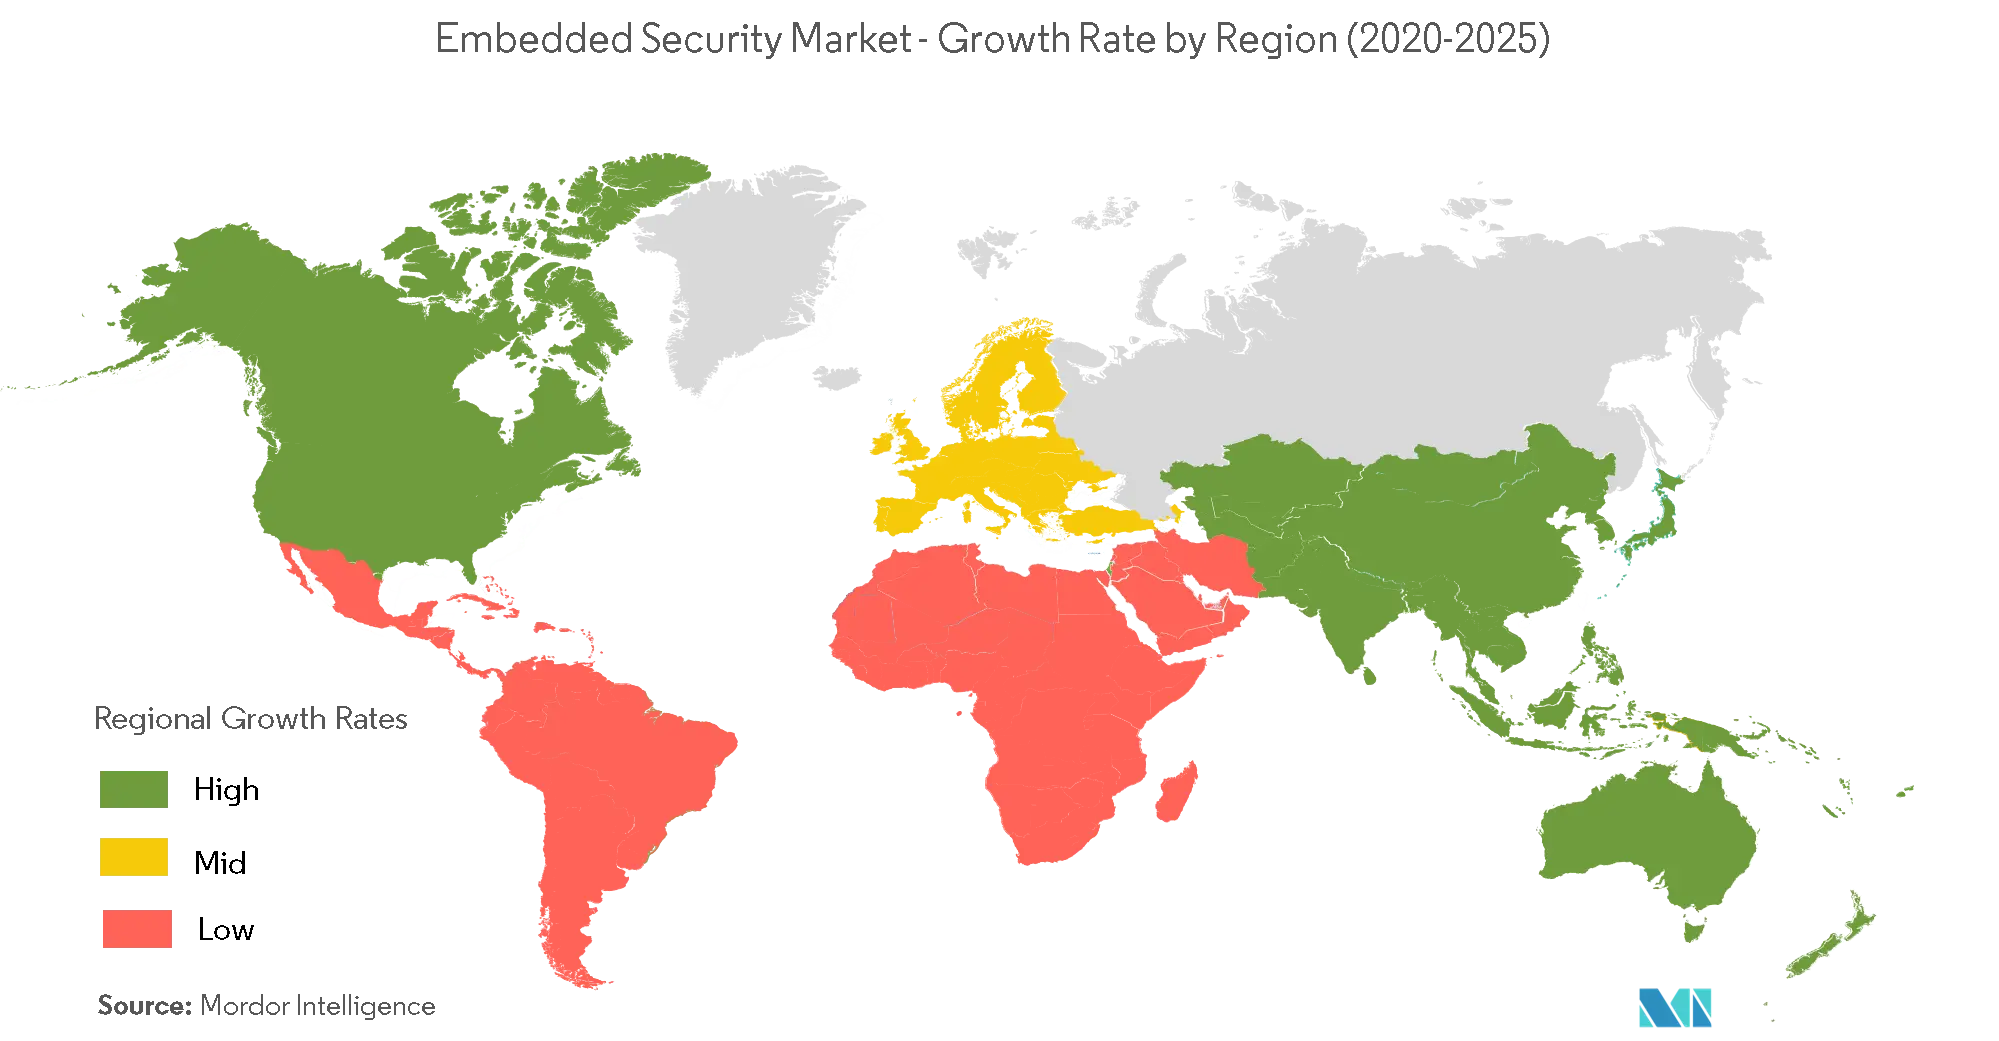 Embedded Security Market Forecast